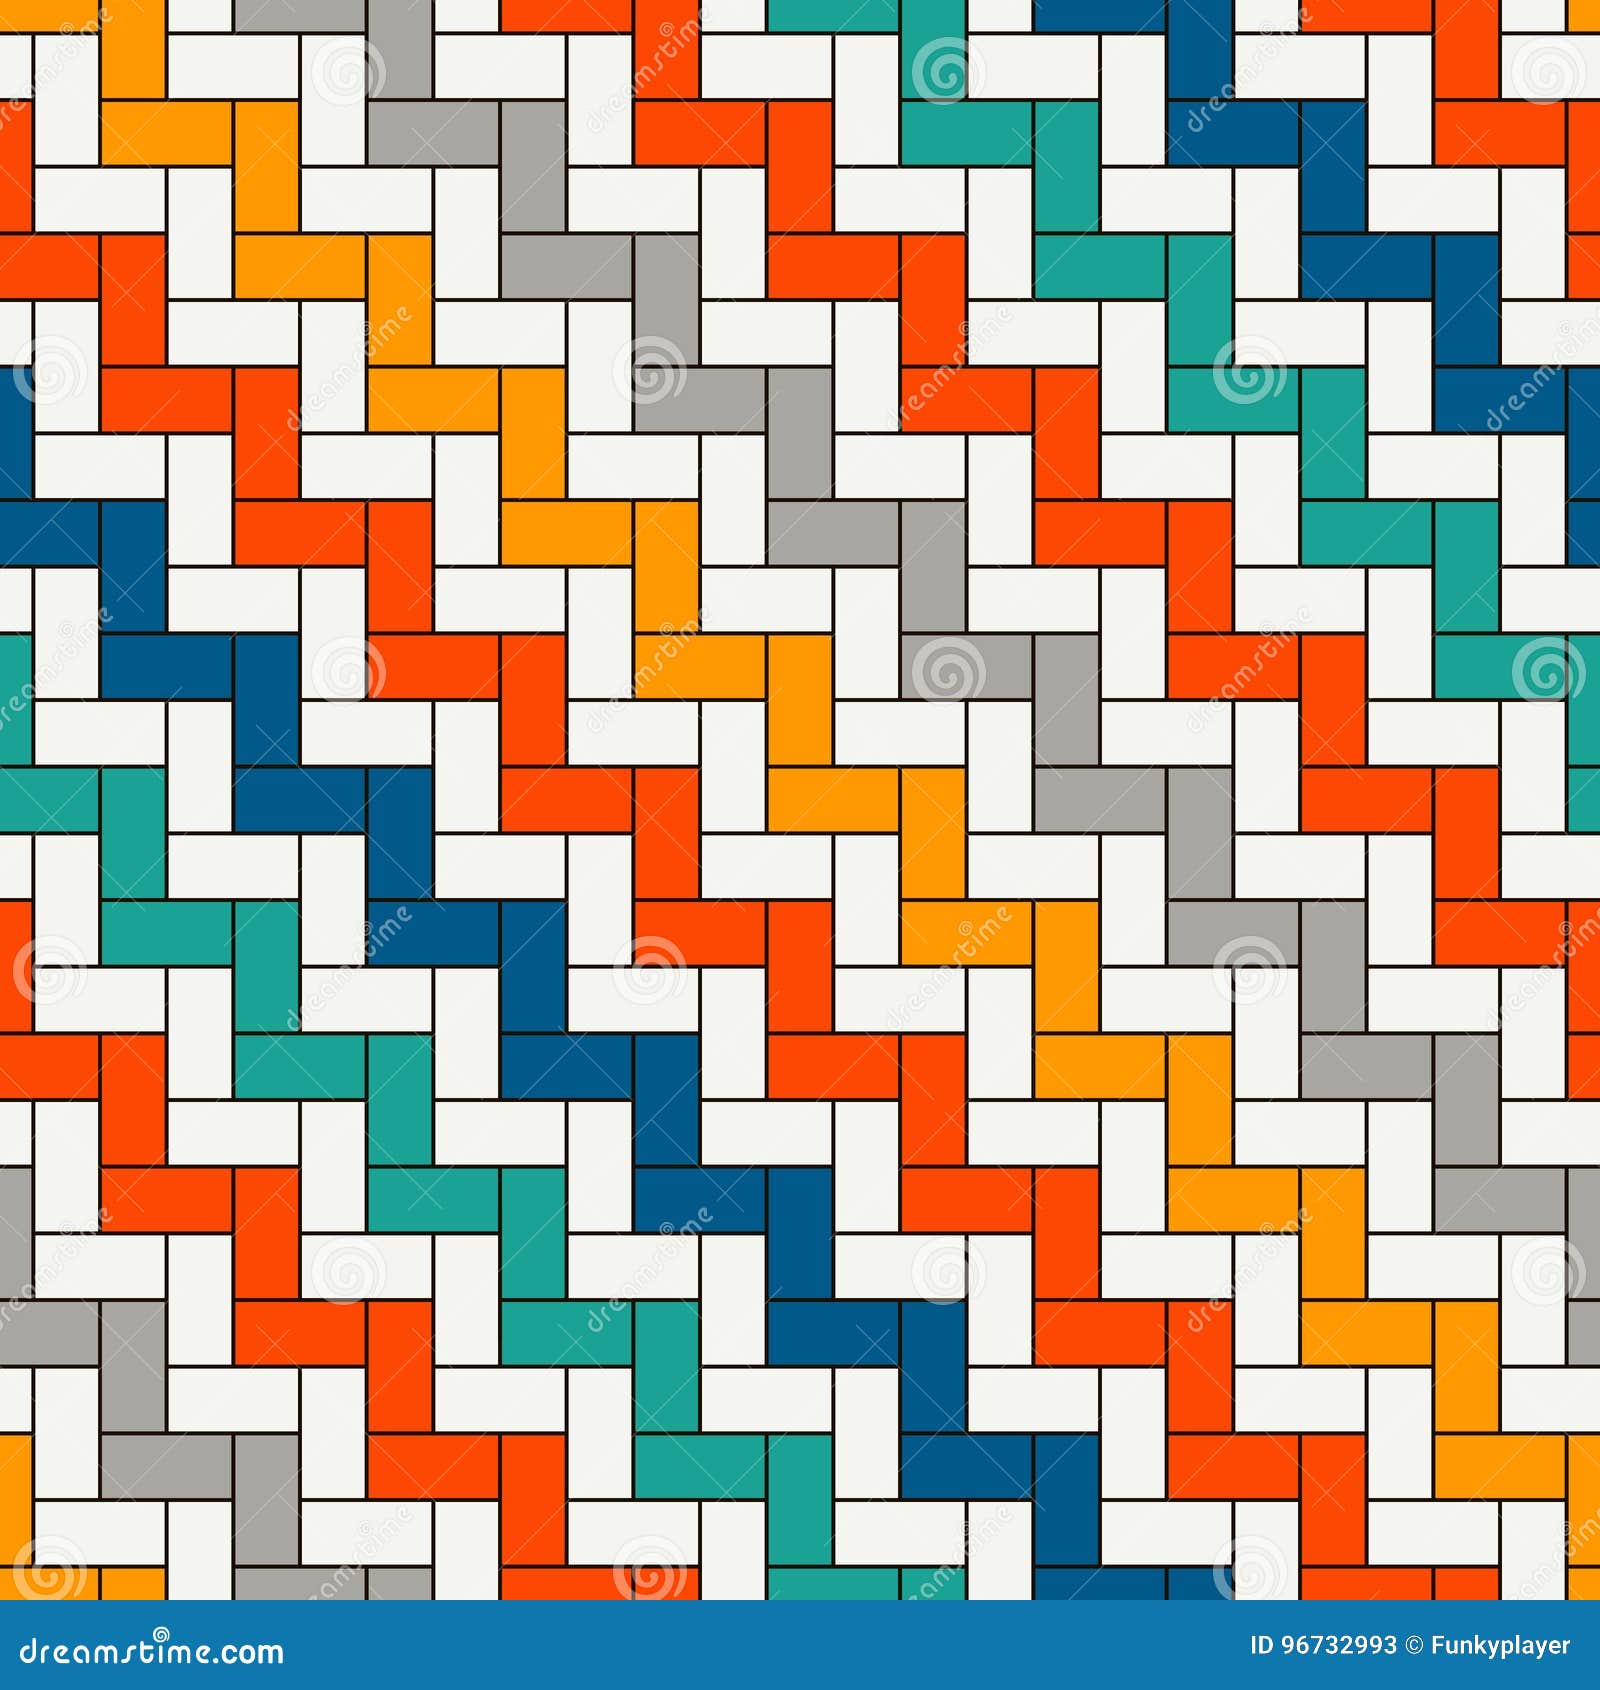 Wallpaper cube, blocks, 4k, 5k, 3d, iphone wallpaper, android wallpaper,  rainbow, abstract, OS #12523